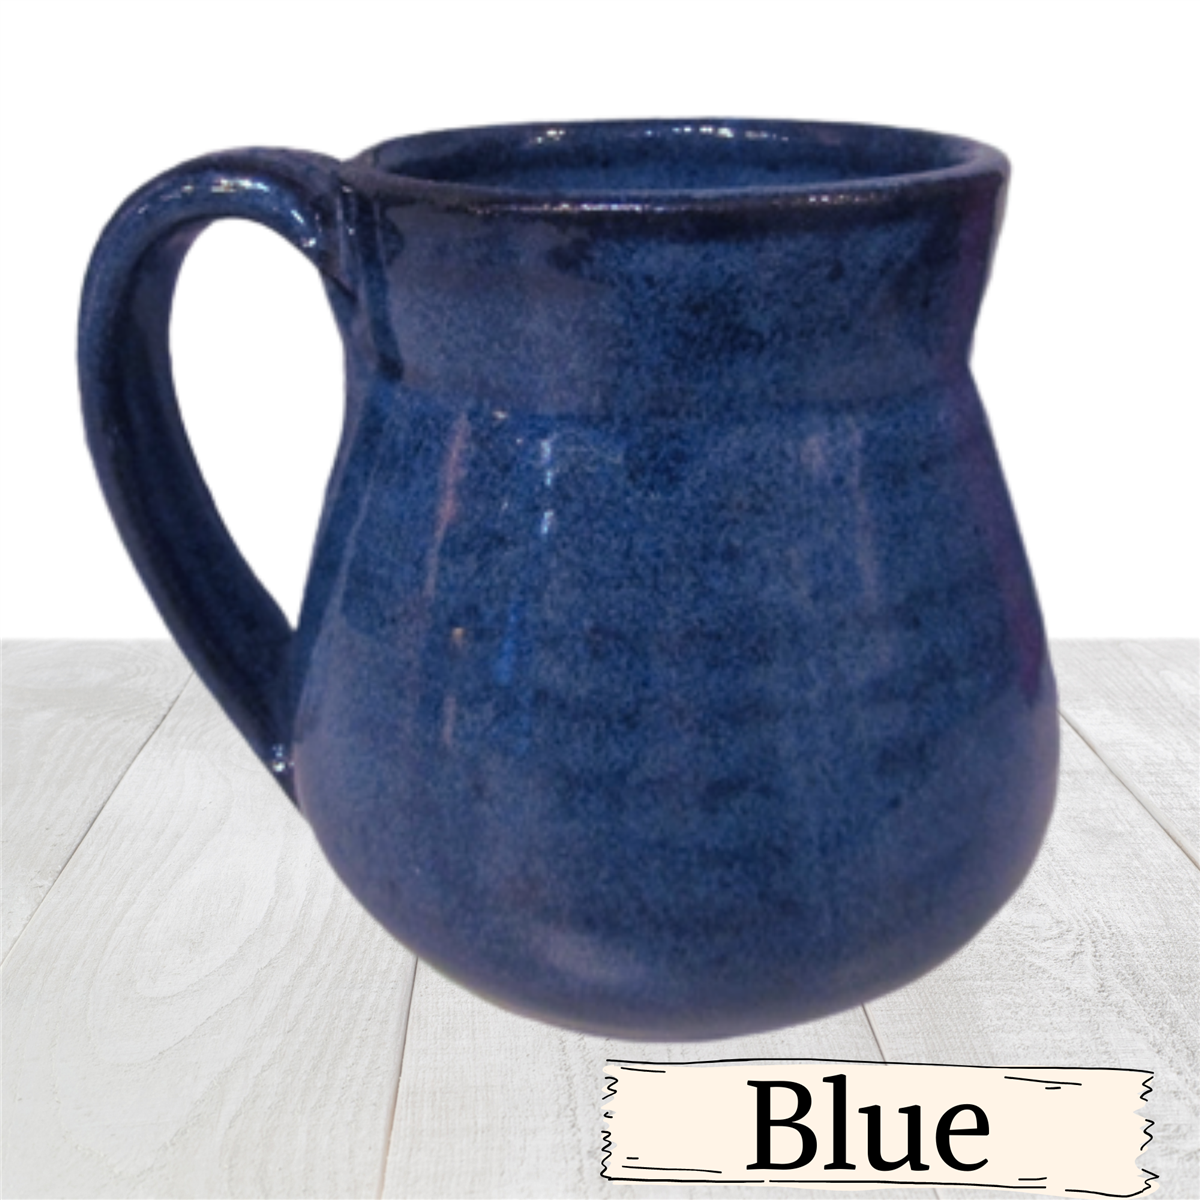 Coffee mug handmade pottery cup holds 12 ounces. Short ceramic tea cup